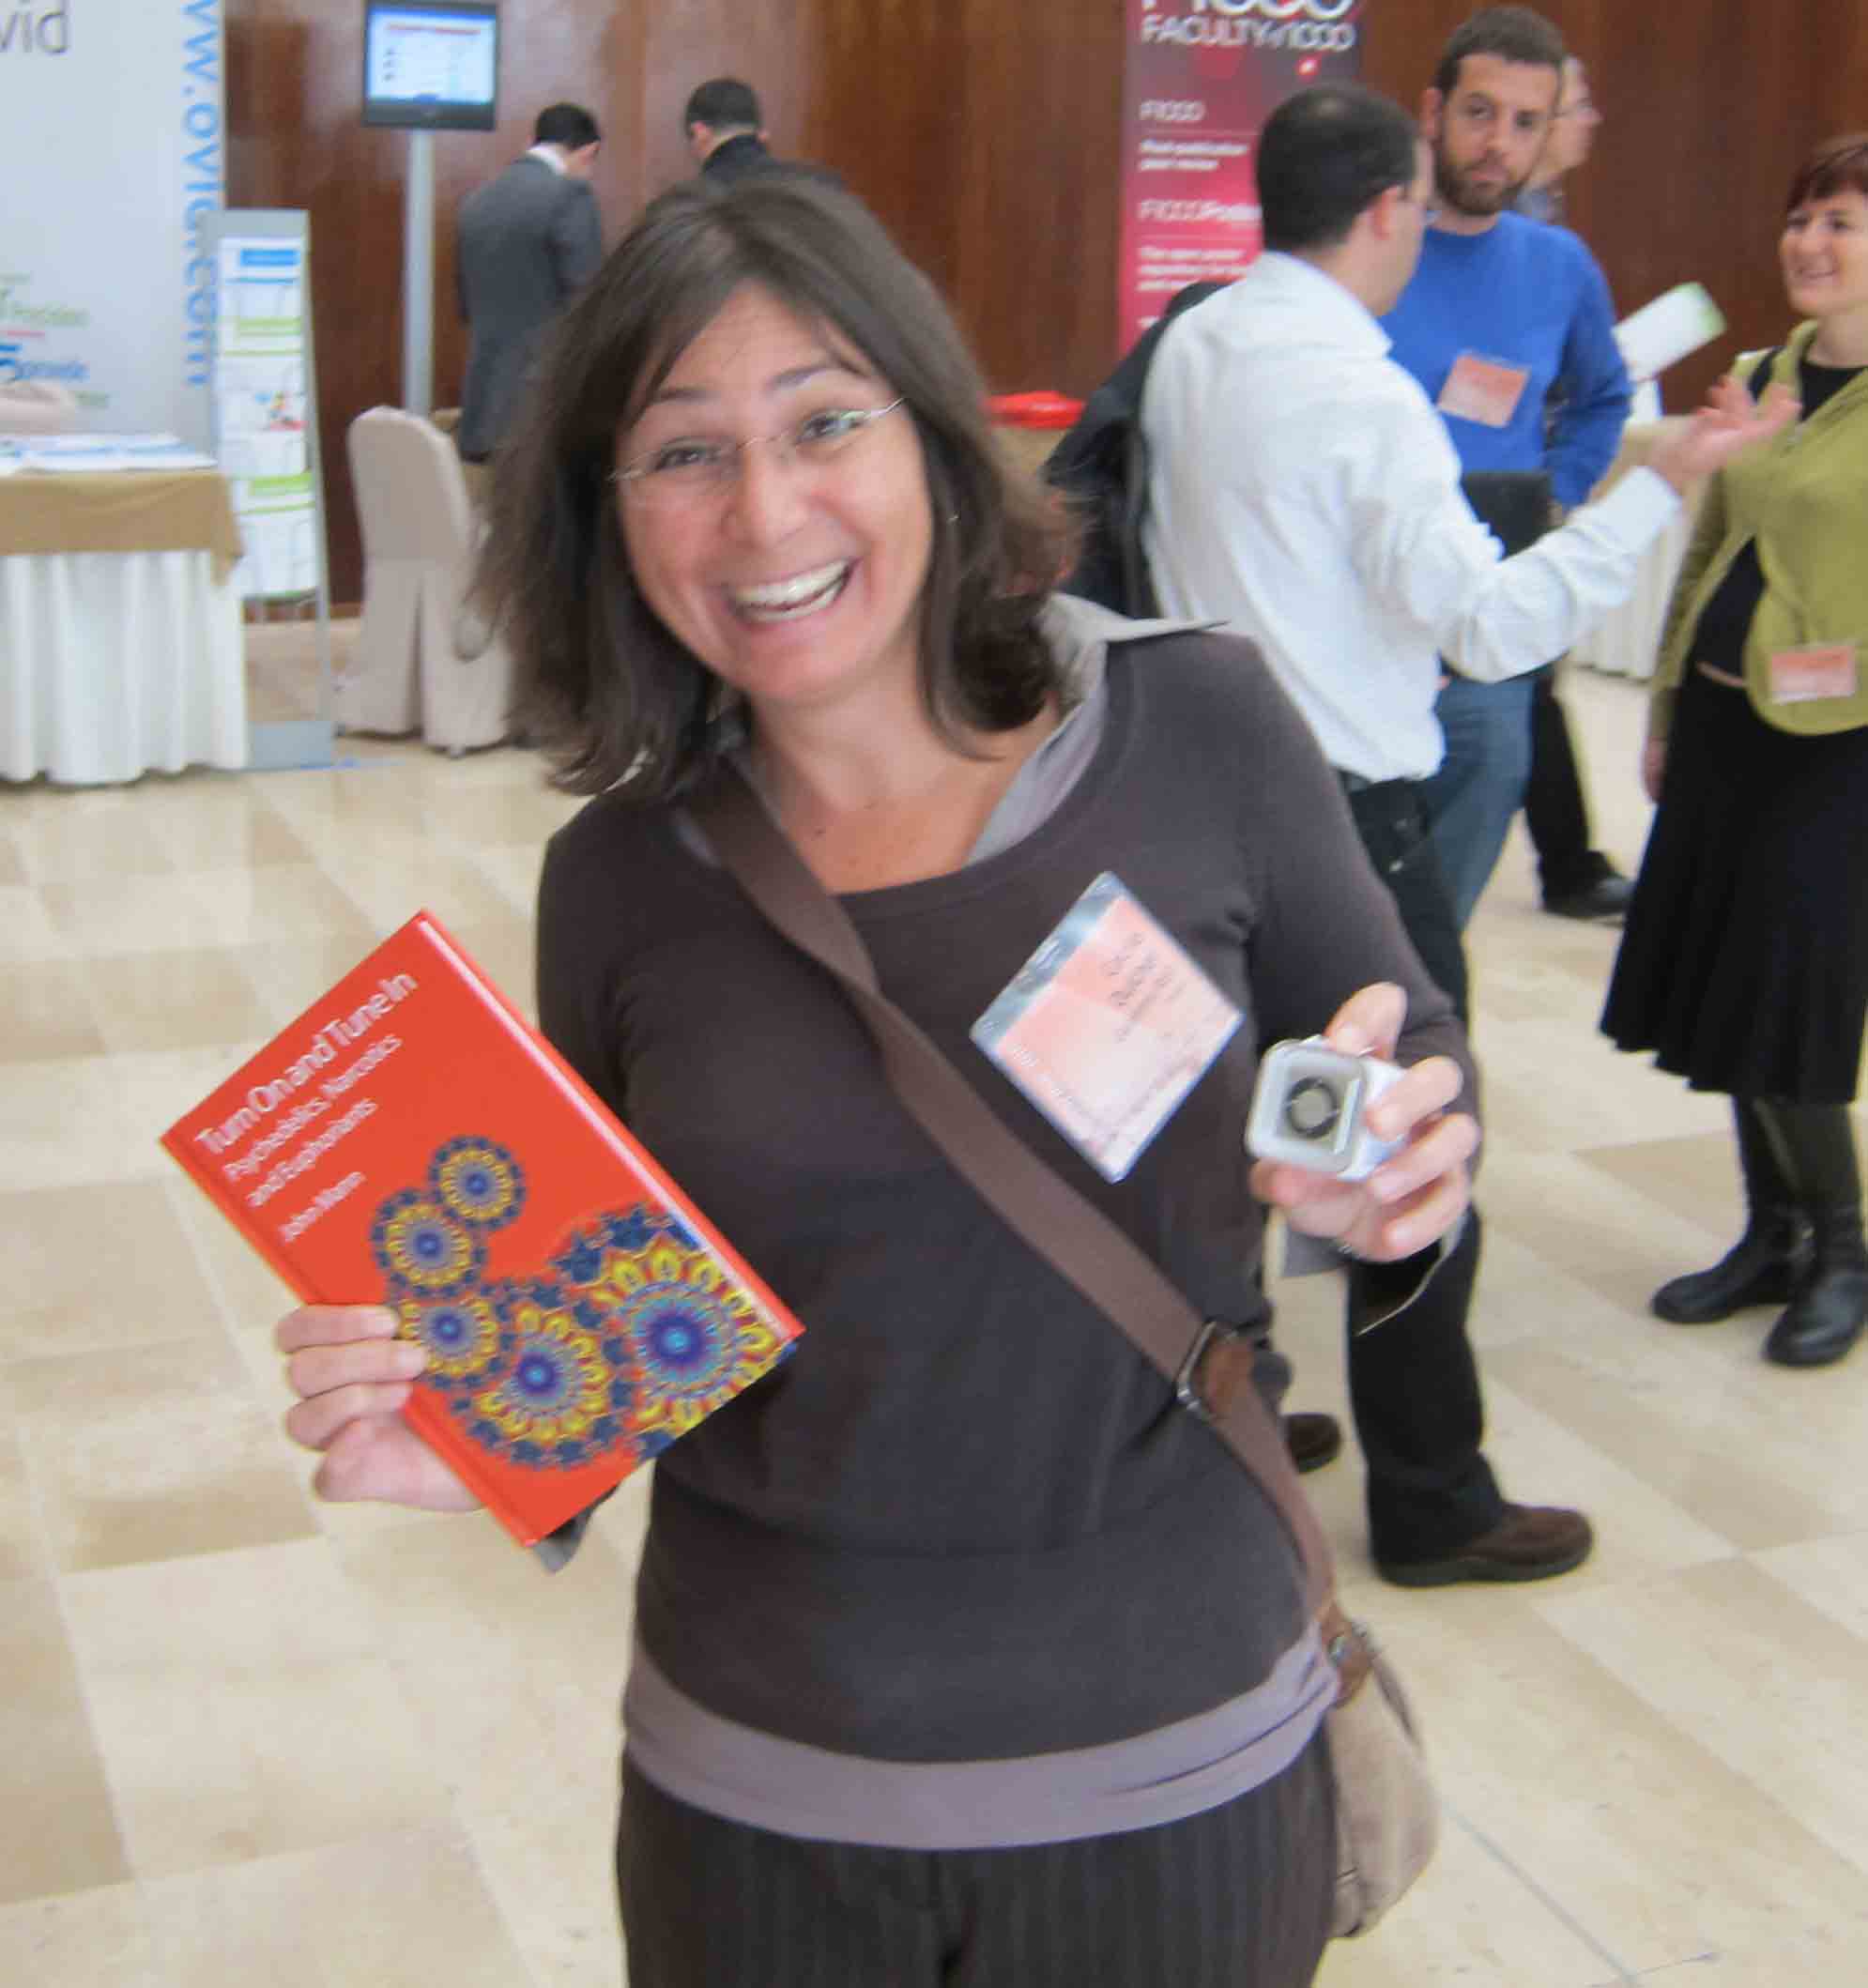 Cecile Ouicher, Galderma R&D – iPod shuffle and RSC book winner Pharma-Bio-Med 2010